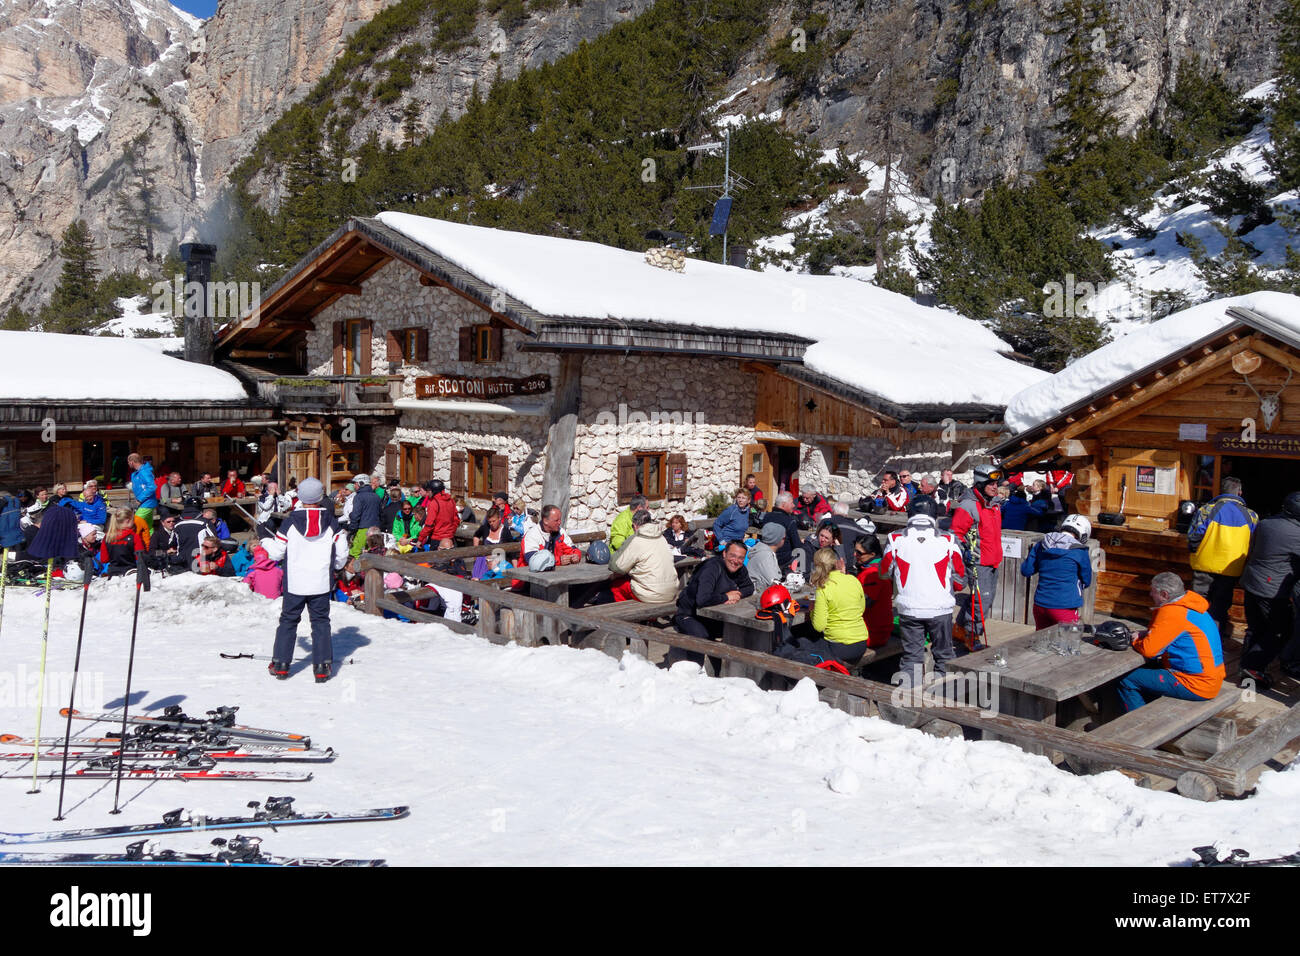 Rifugio Scotoni Hütte im Winter Skifahrer, Alpe Lagazuoi, San Cassiano, Dolomiten, Südtirol, Alto Adige, Italien Stockfoto